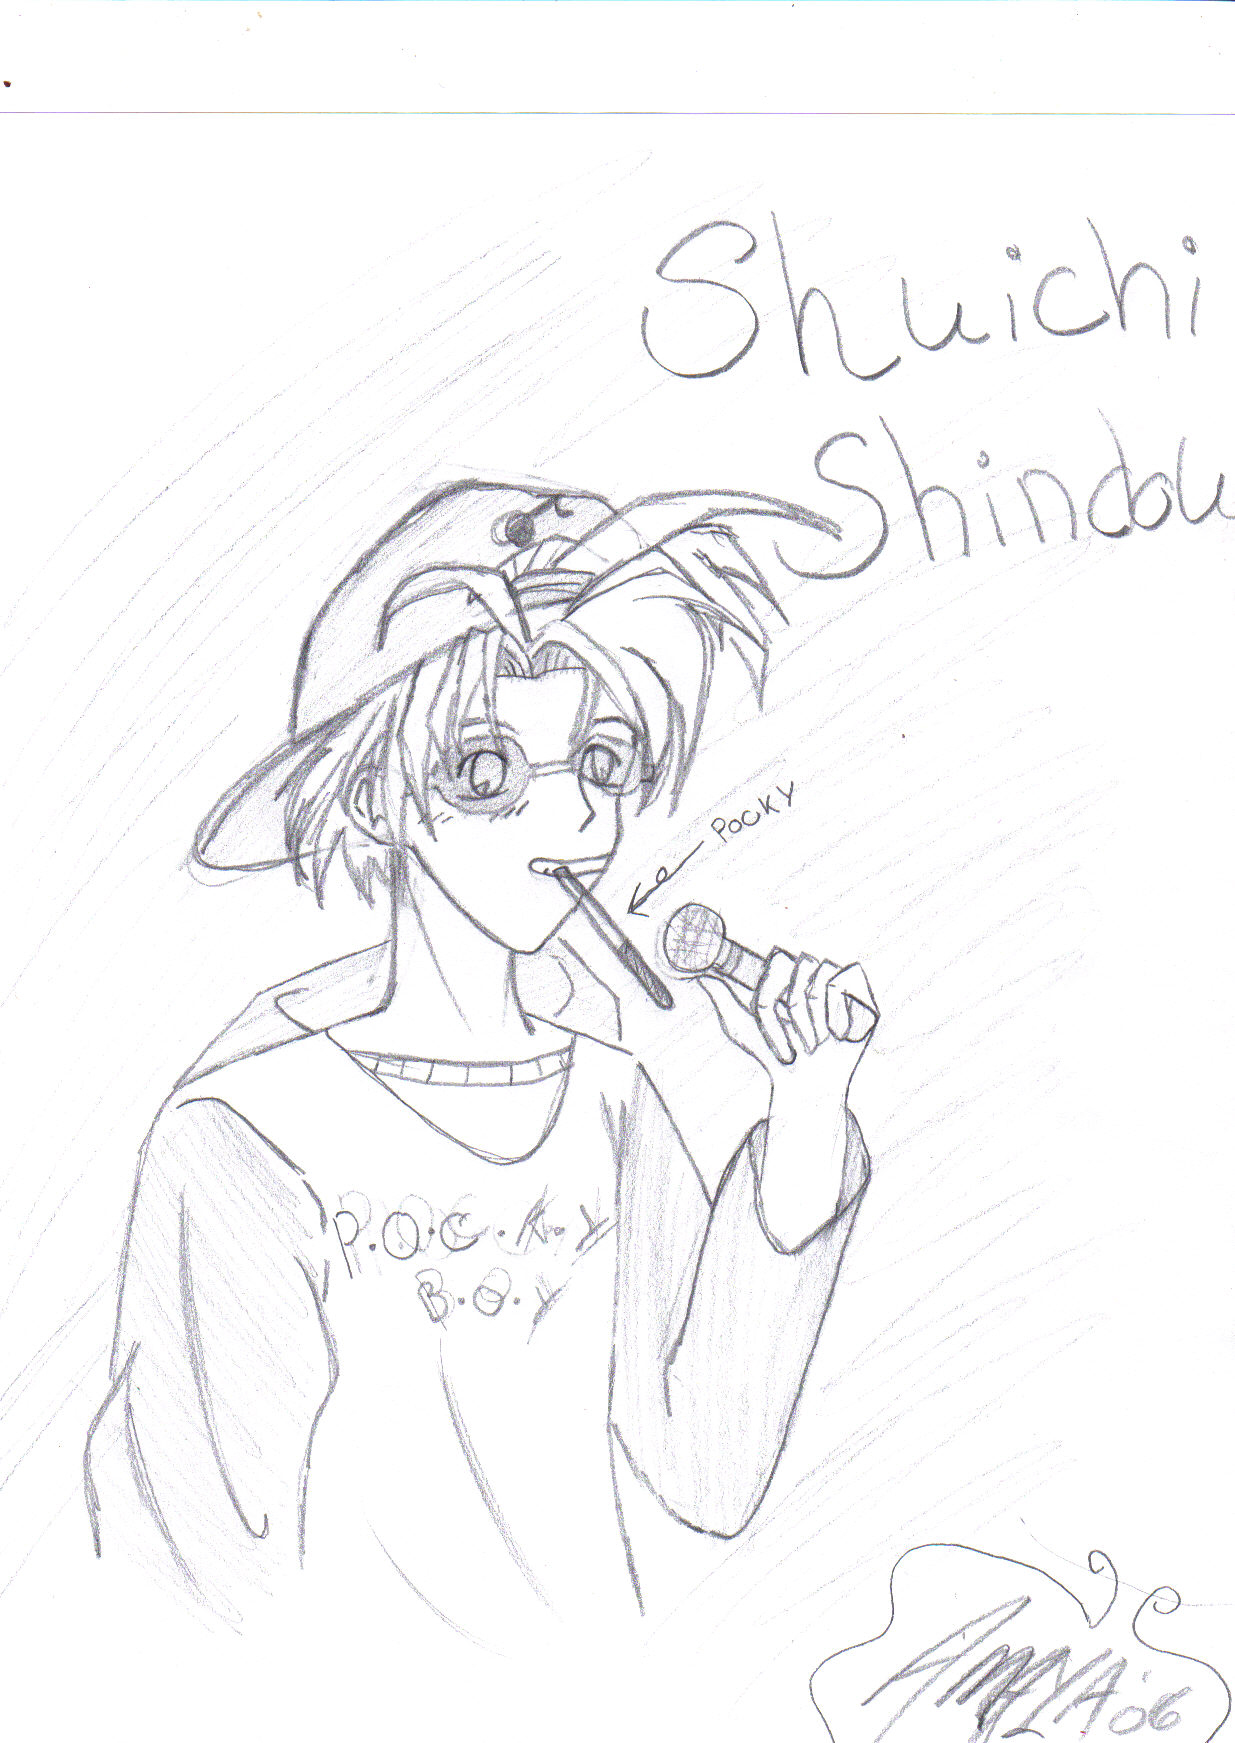 Shuichi Shindou~** by night-vixen-bandit45